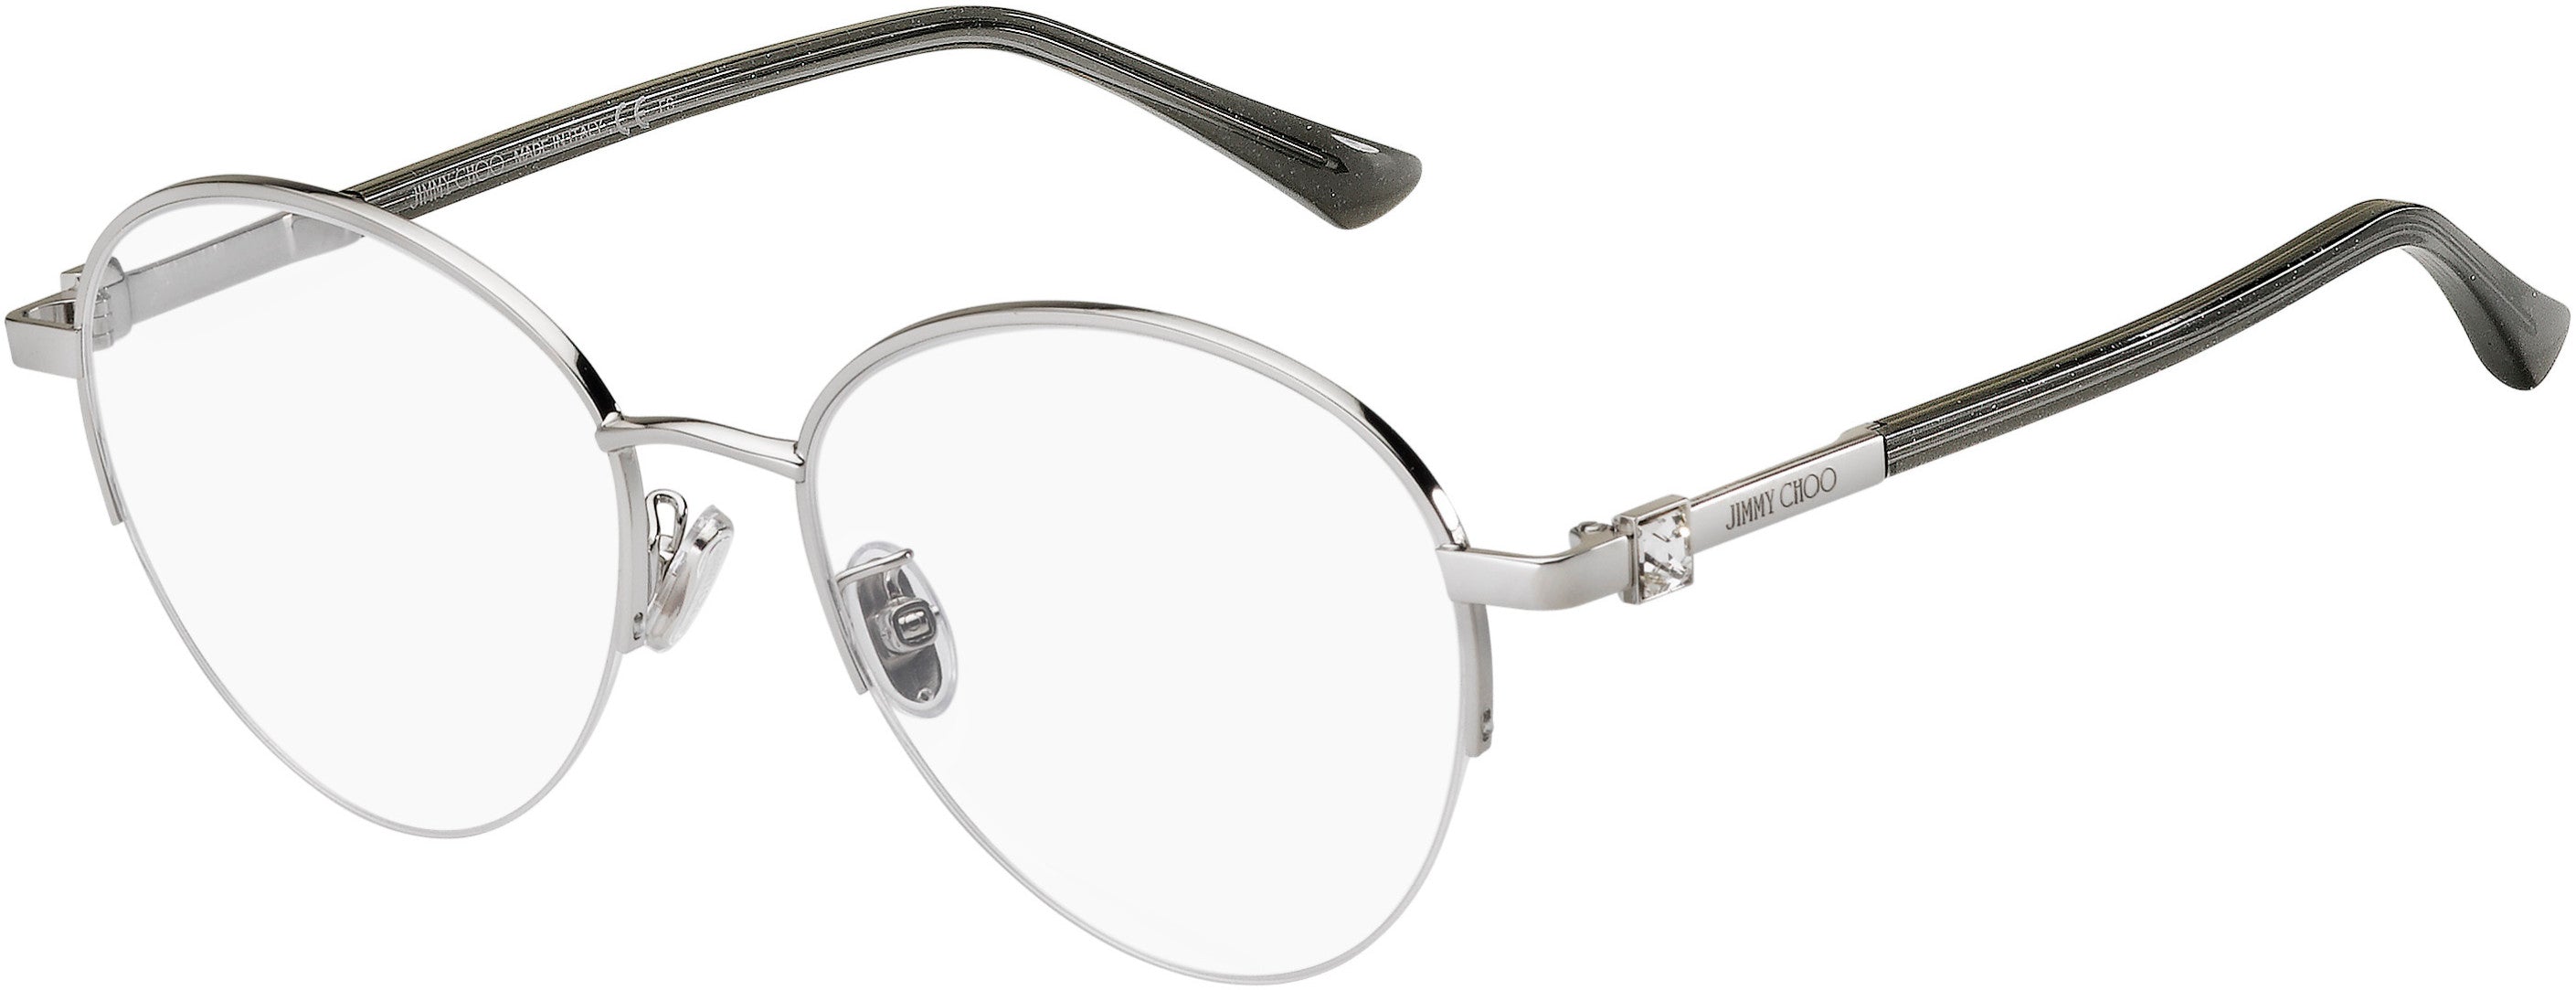  Jimmy Choo 290/F Tea Cup Eyeglasses 06W2-06W2  Silver Black Glitter (00 Demo Lens)